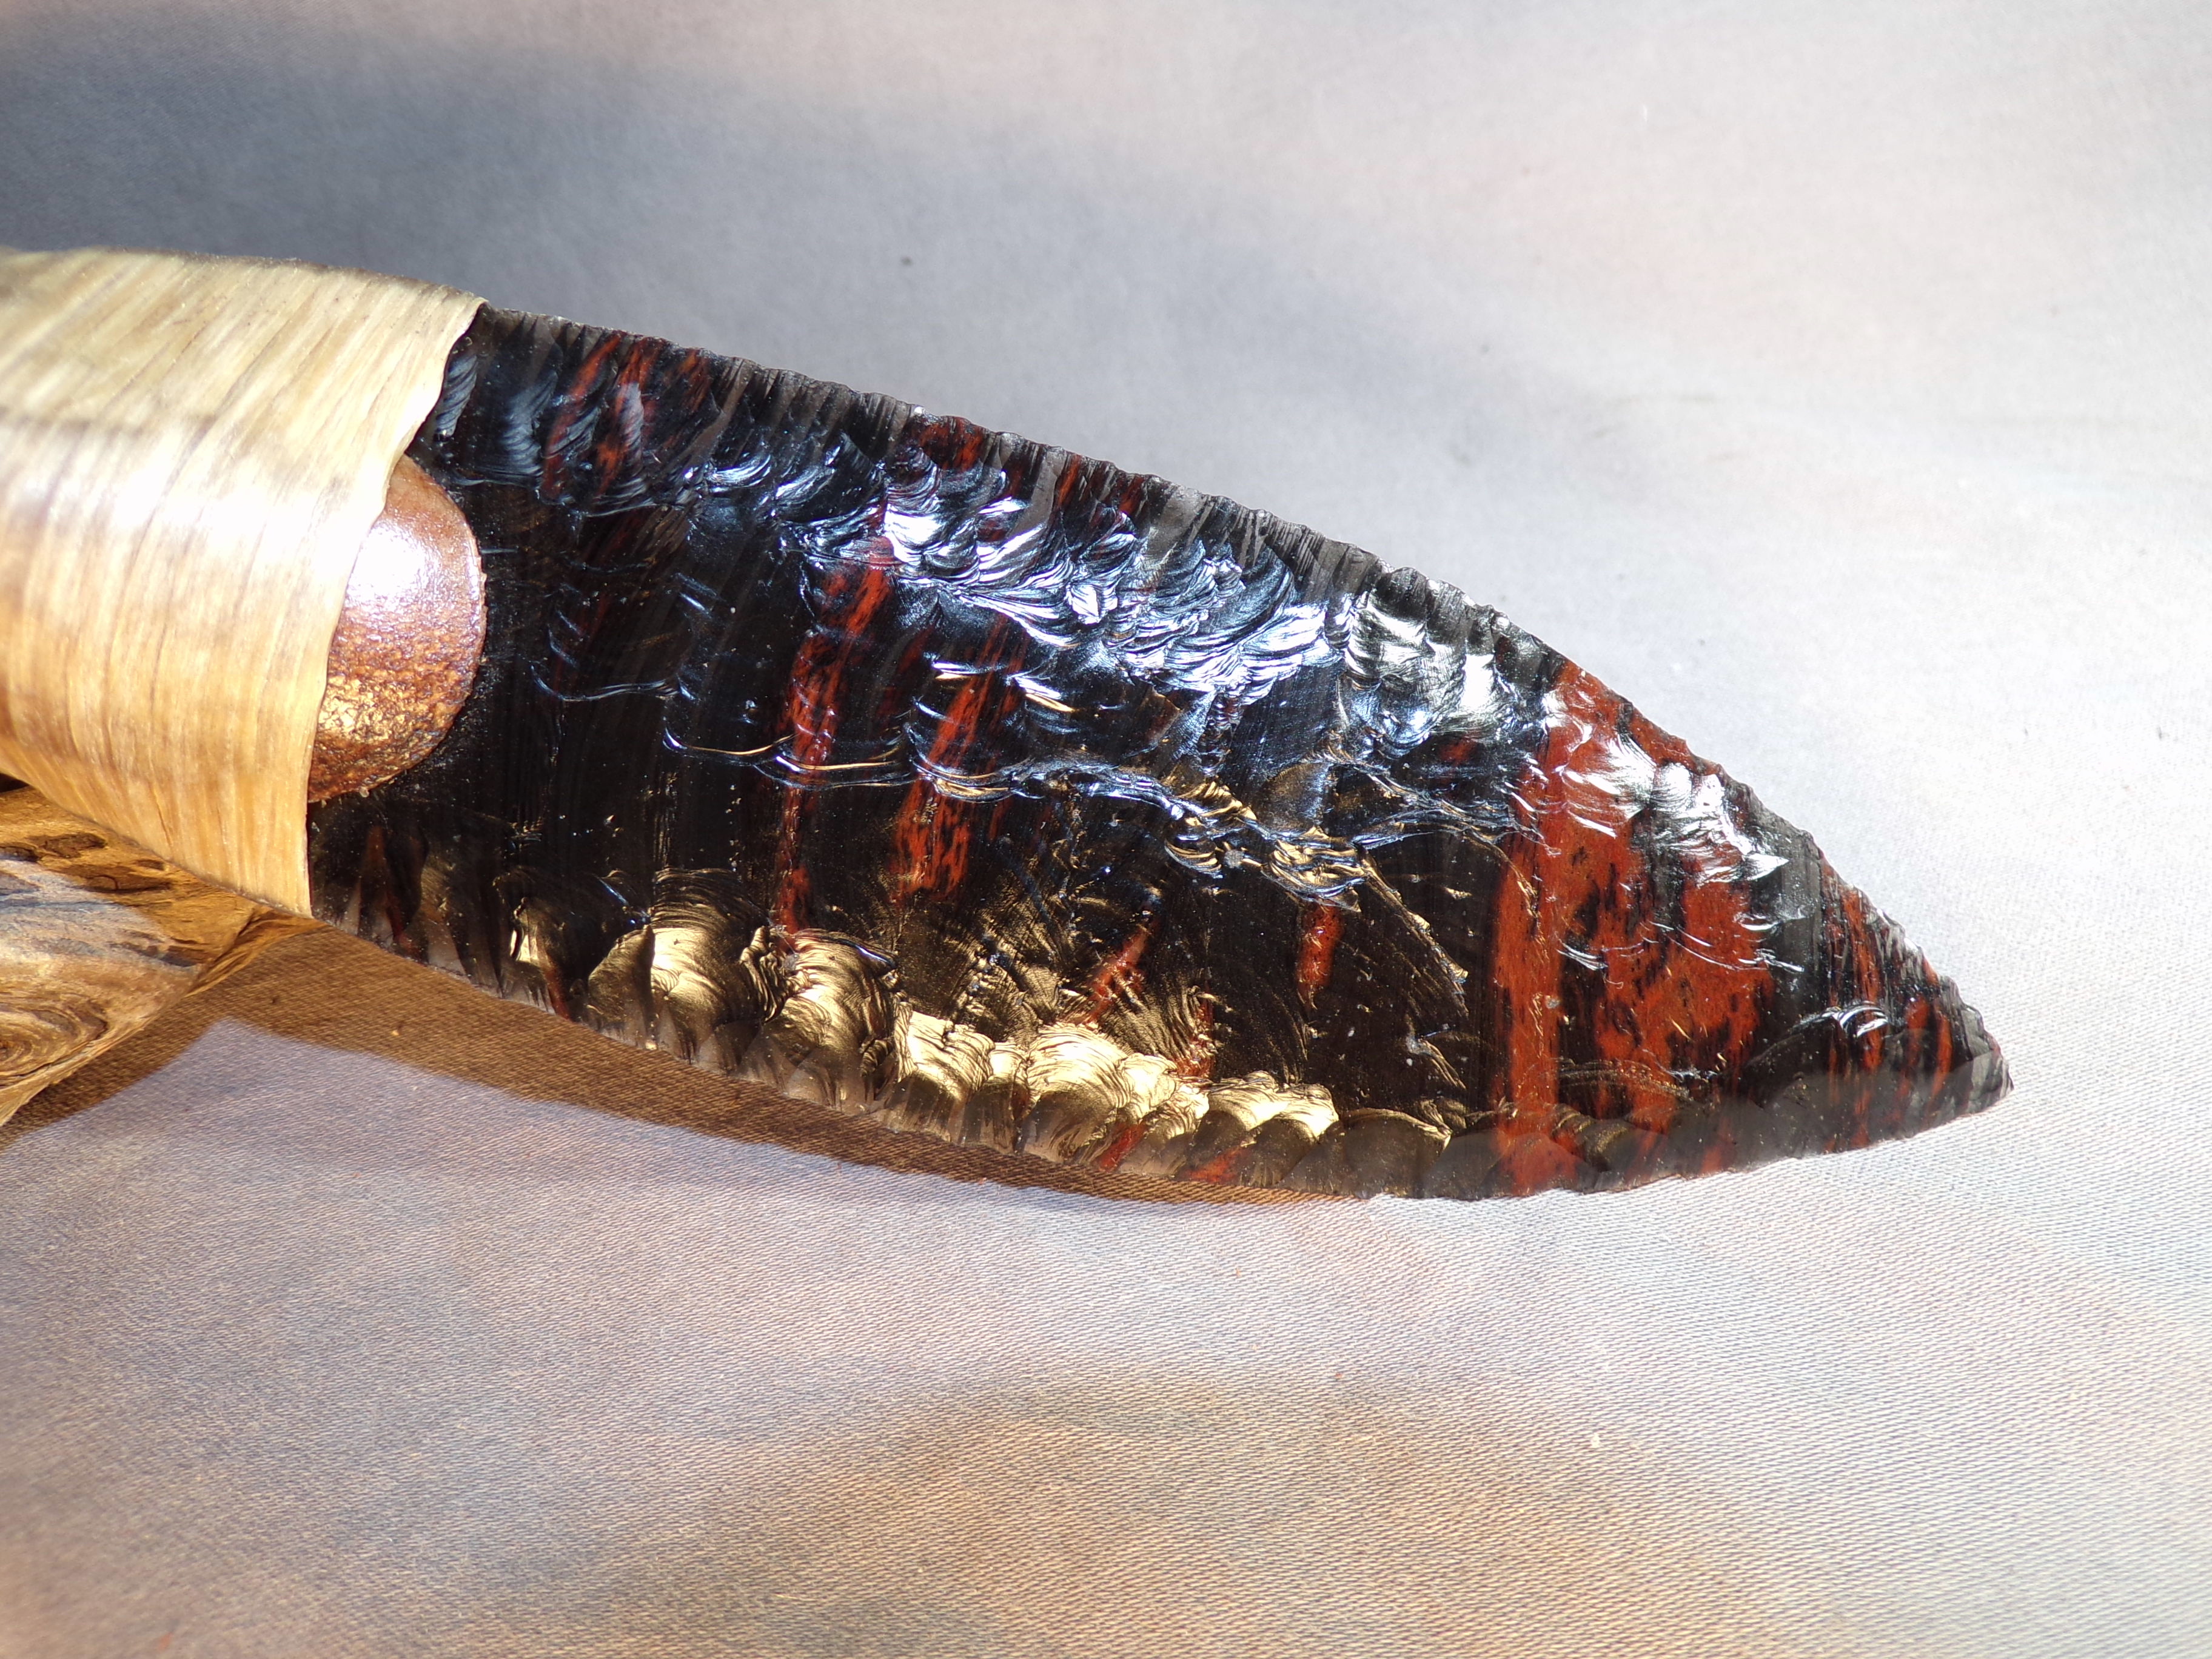 obsidian knife sharper thandiamond